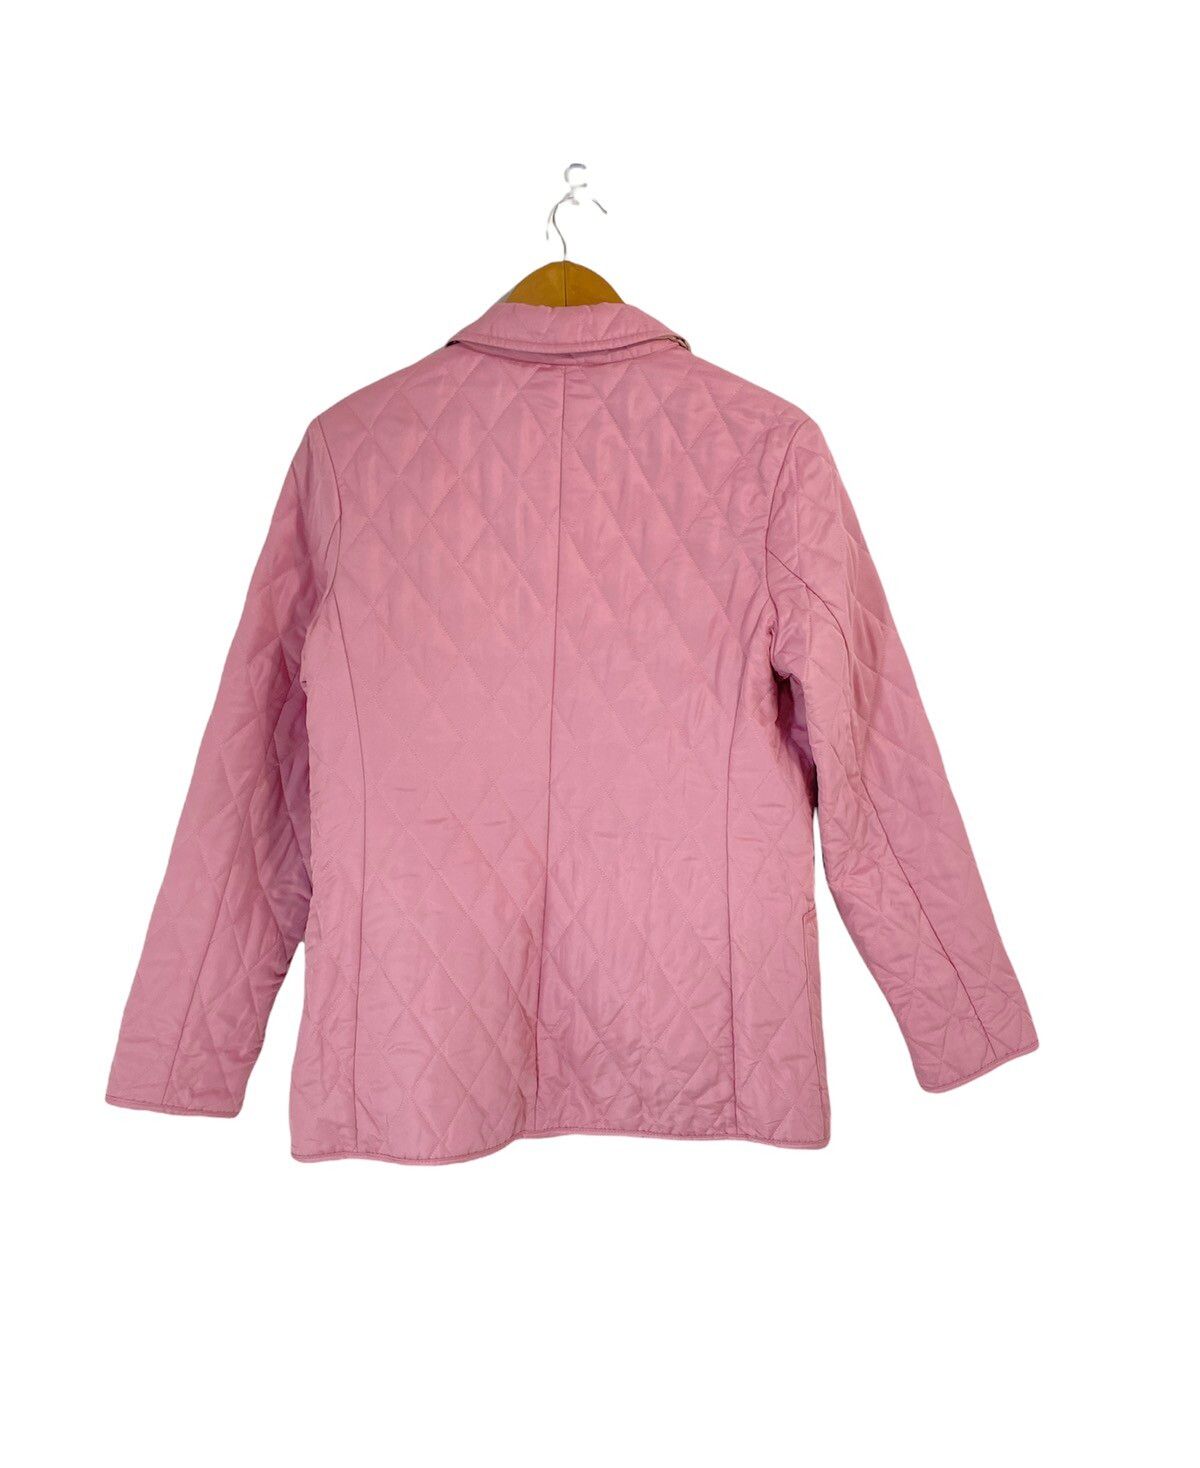 Burberry Quilted Jacket Design Pink Color Nova Check - 2